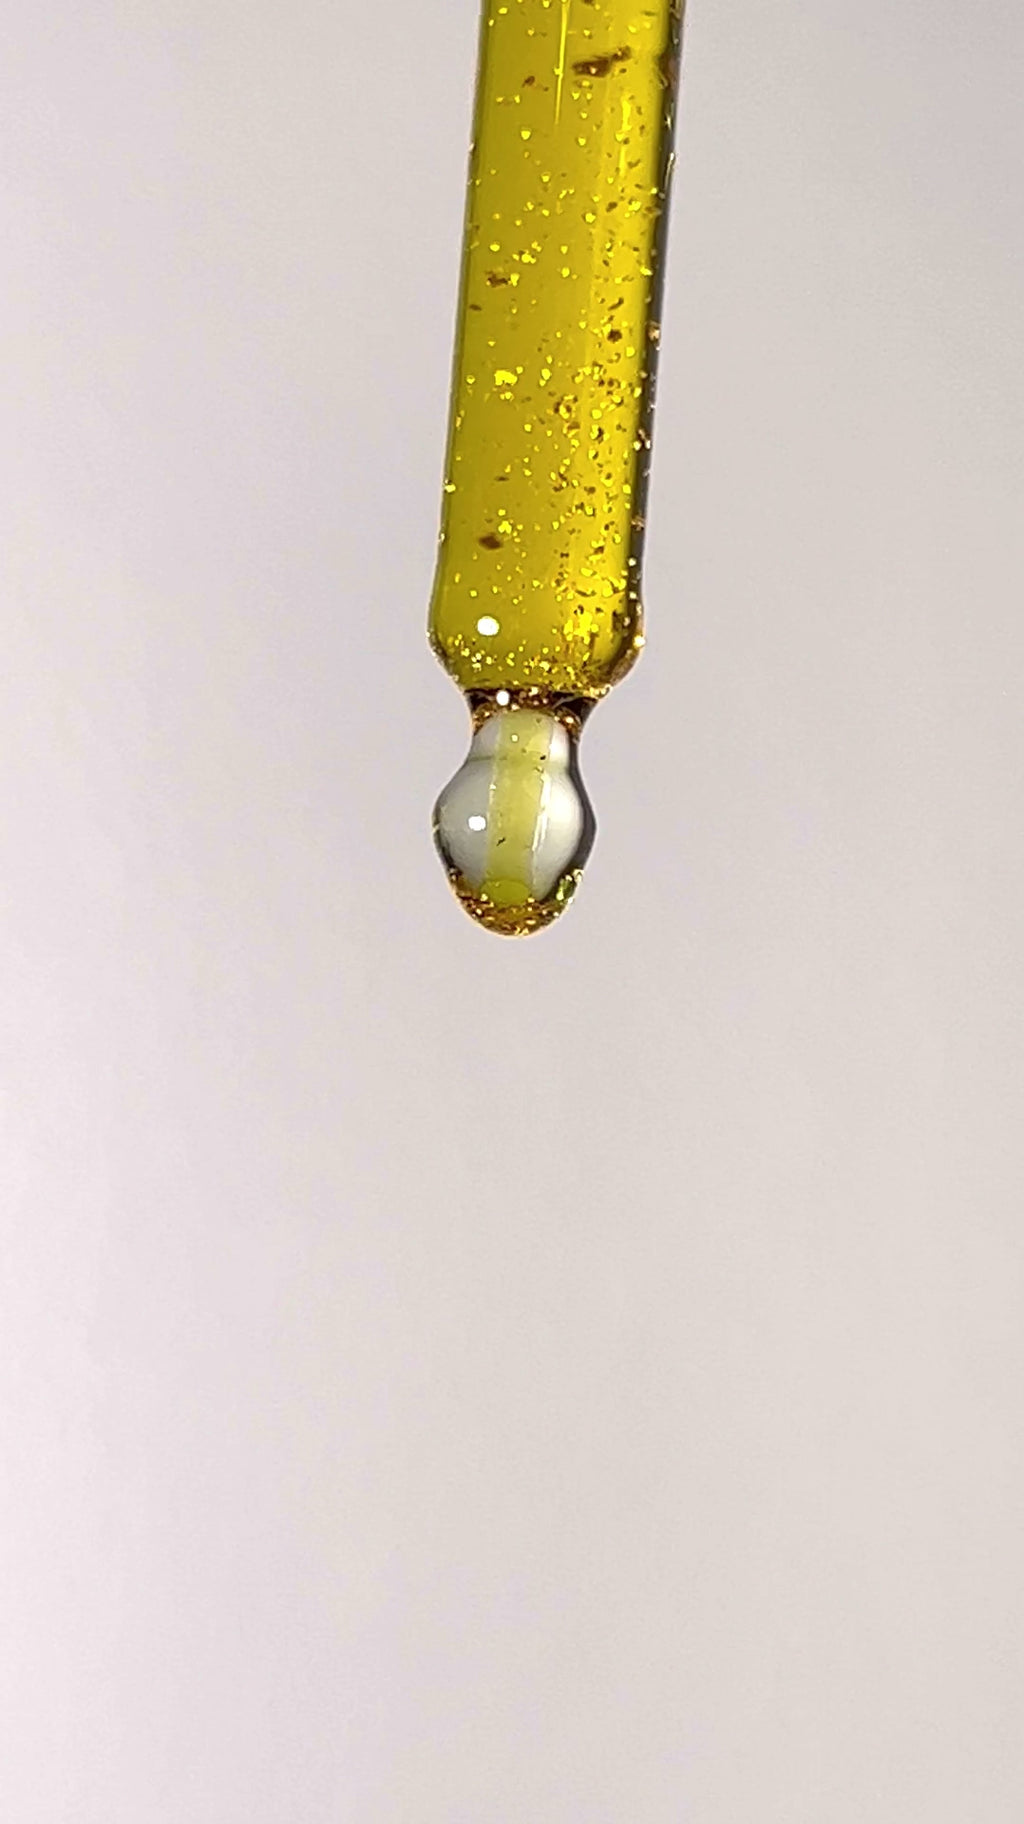 Mohi Skin Care pipette of gold oil